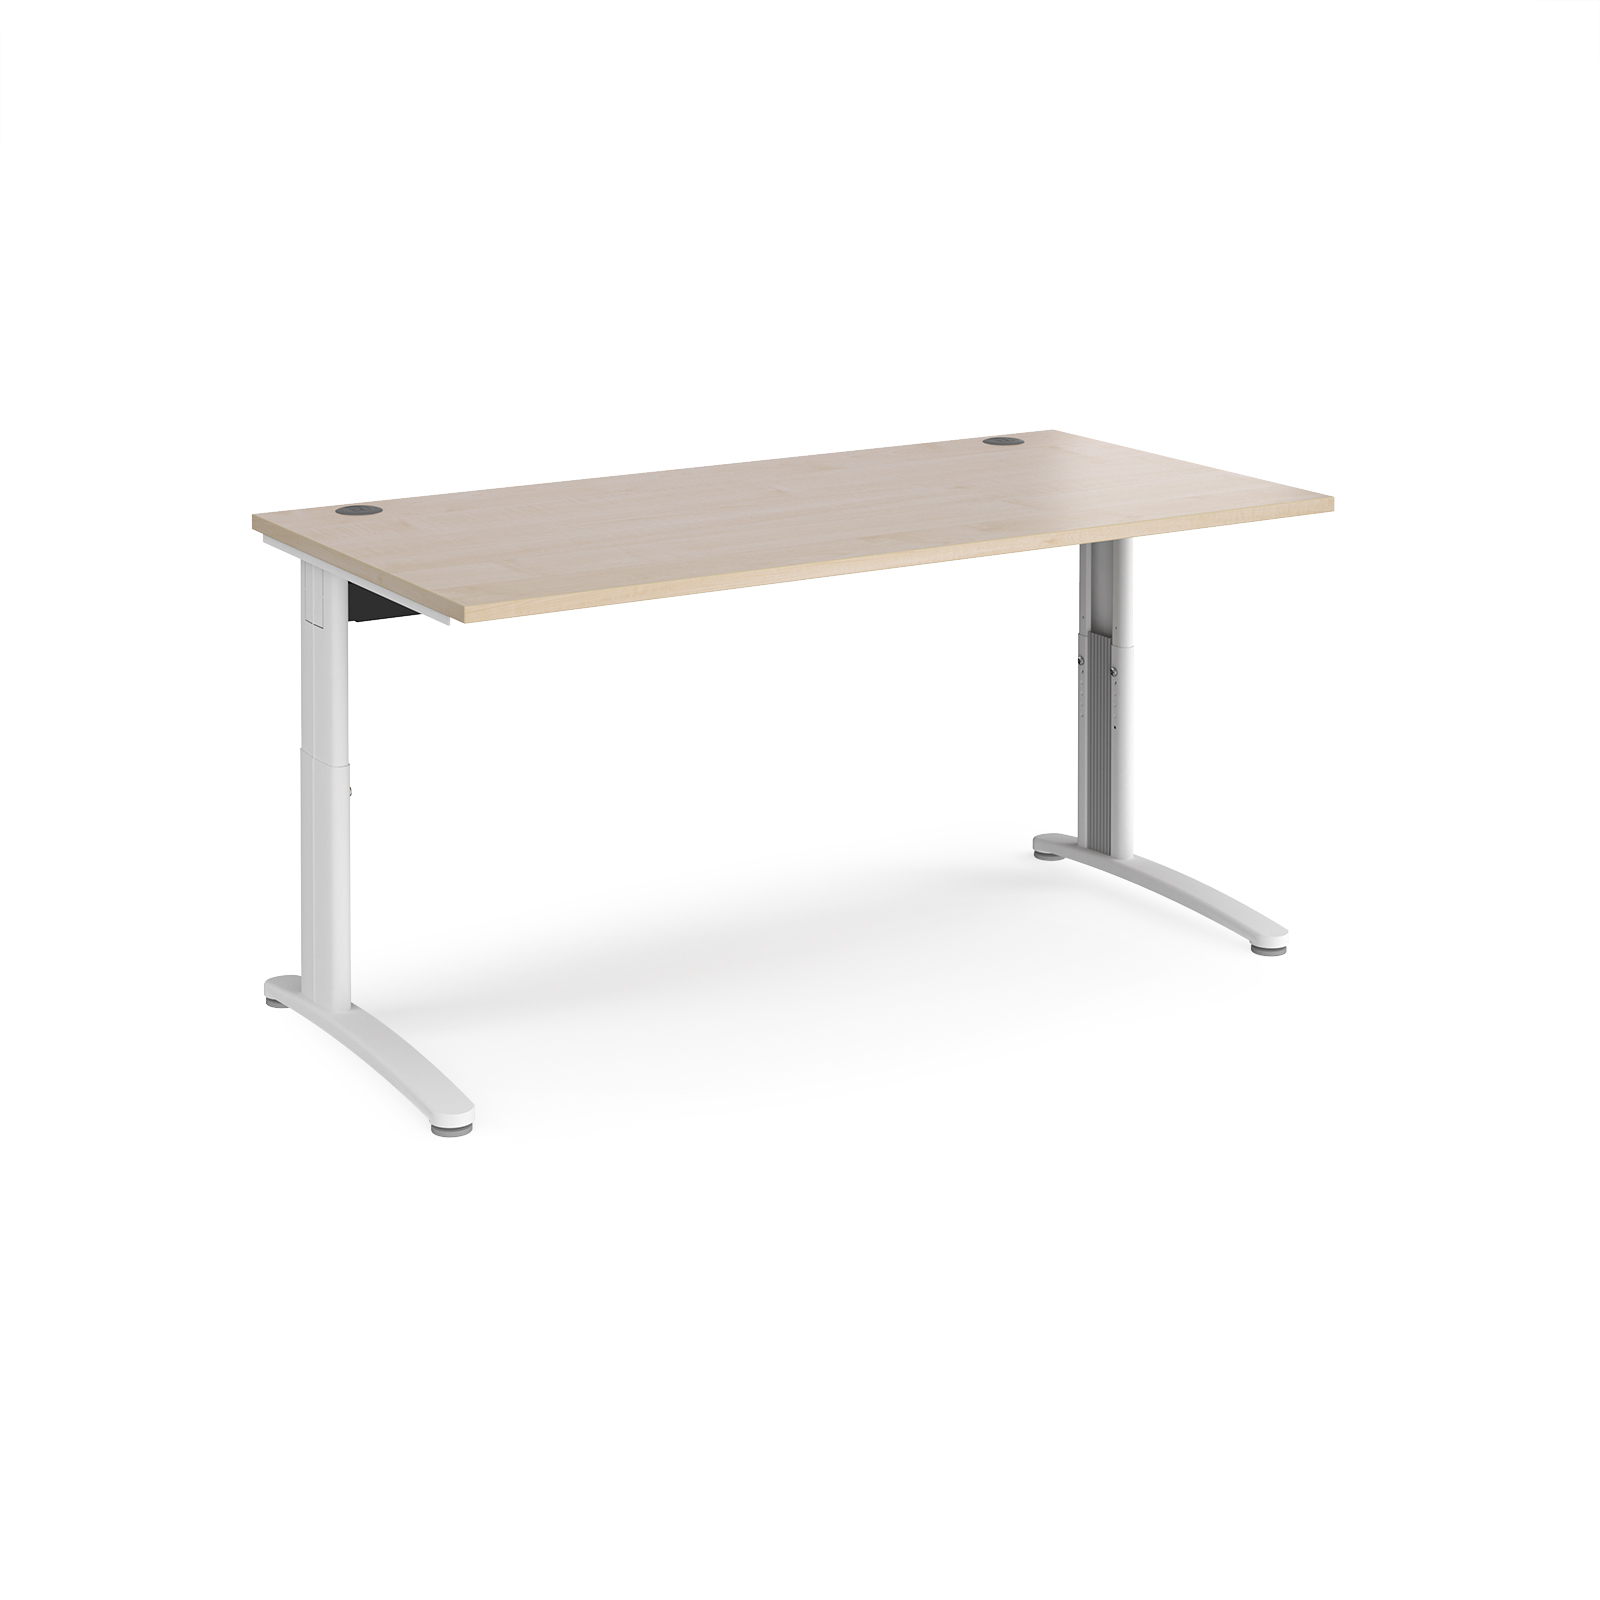 TR10 height settable straight desk 1600mm x 800mm - white frame, maple top